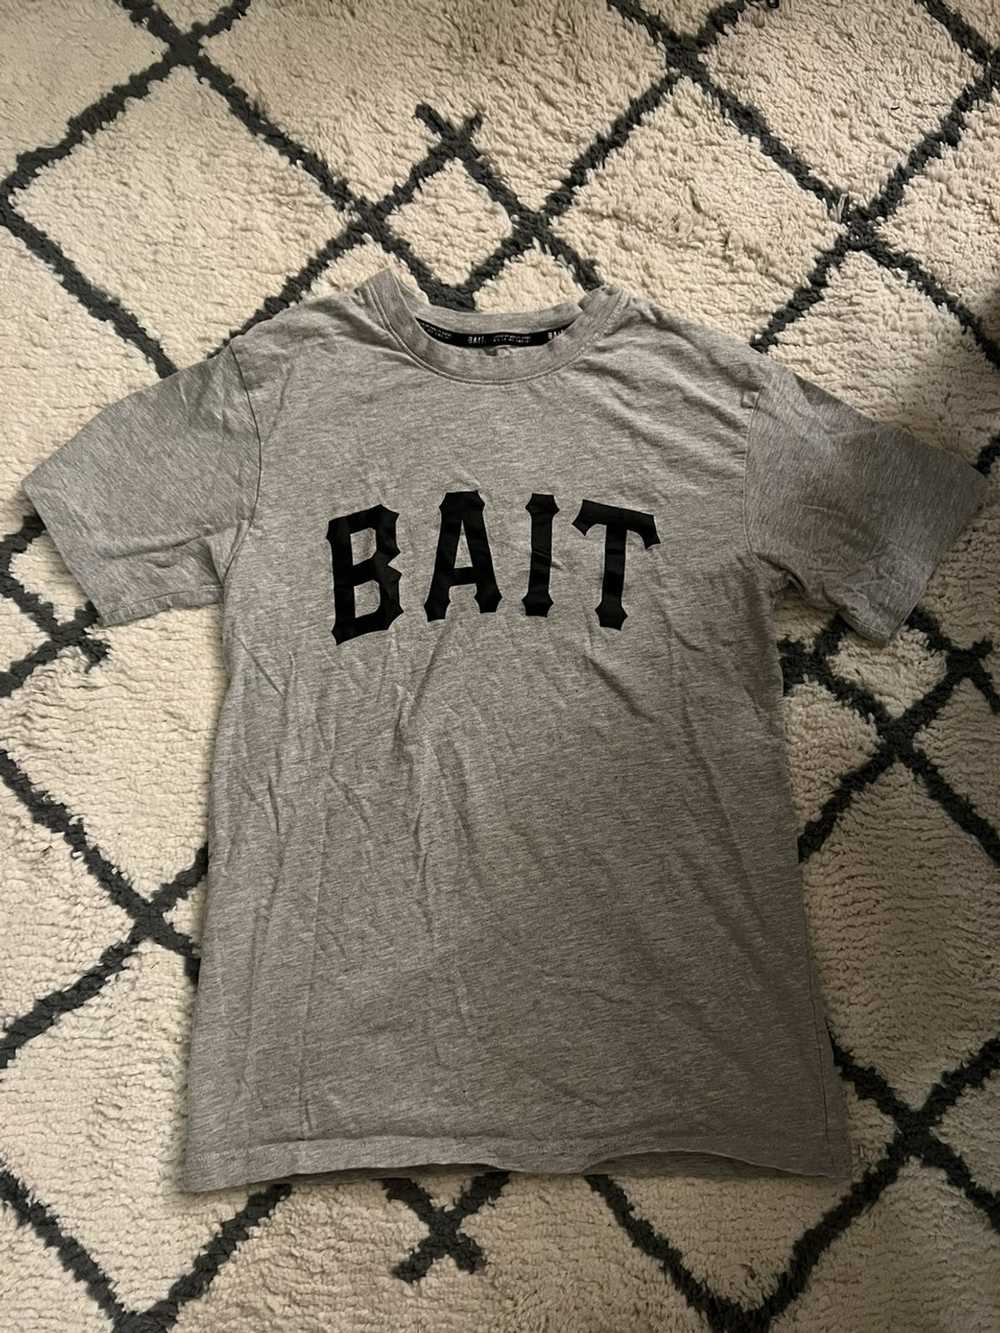 Bait BAIT Tee Grey Size Small - image 1